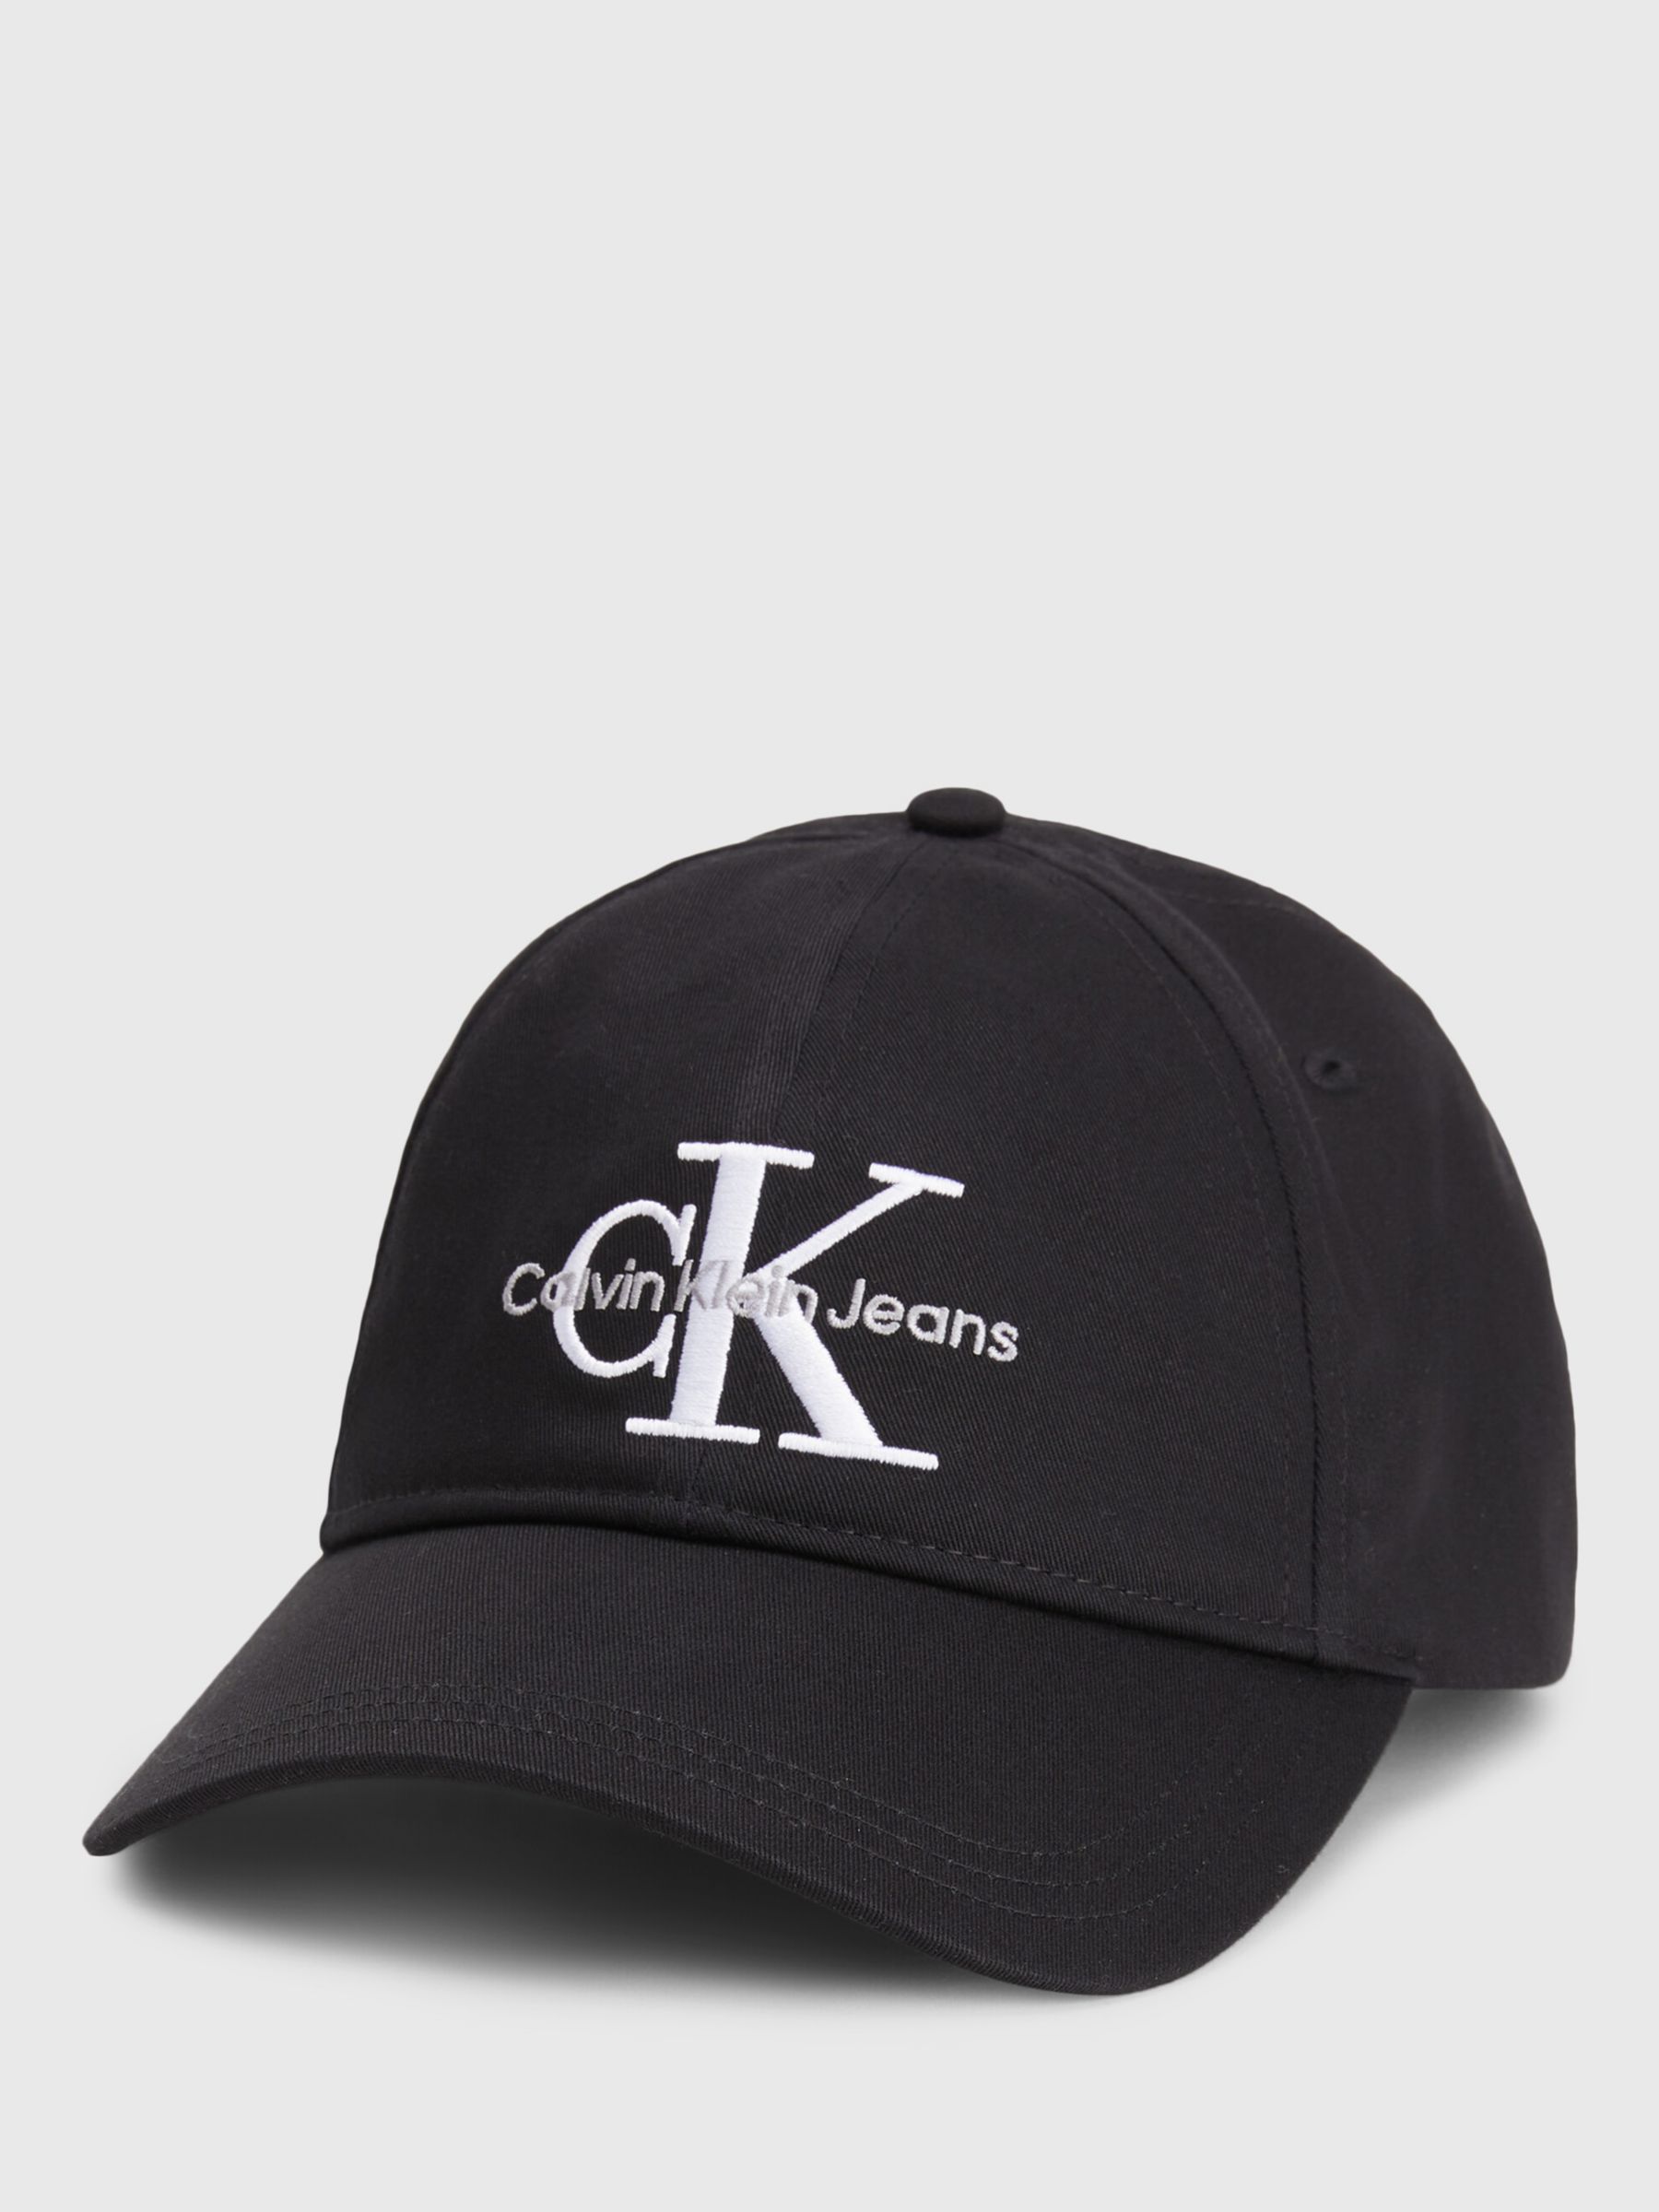 Monogrammed Baseball Hats